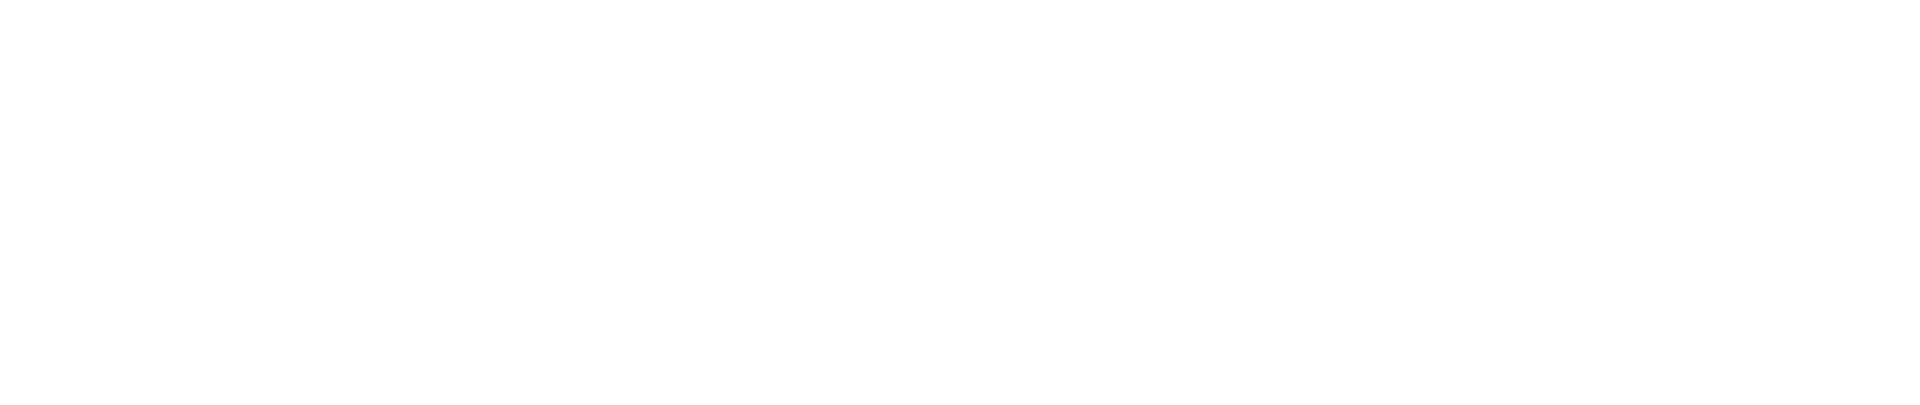 logo-feuerwehr-giengen